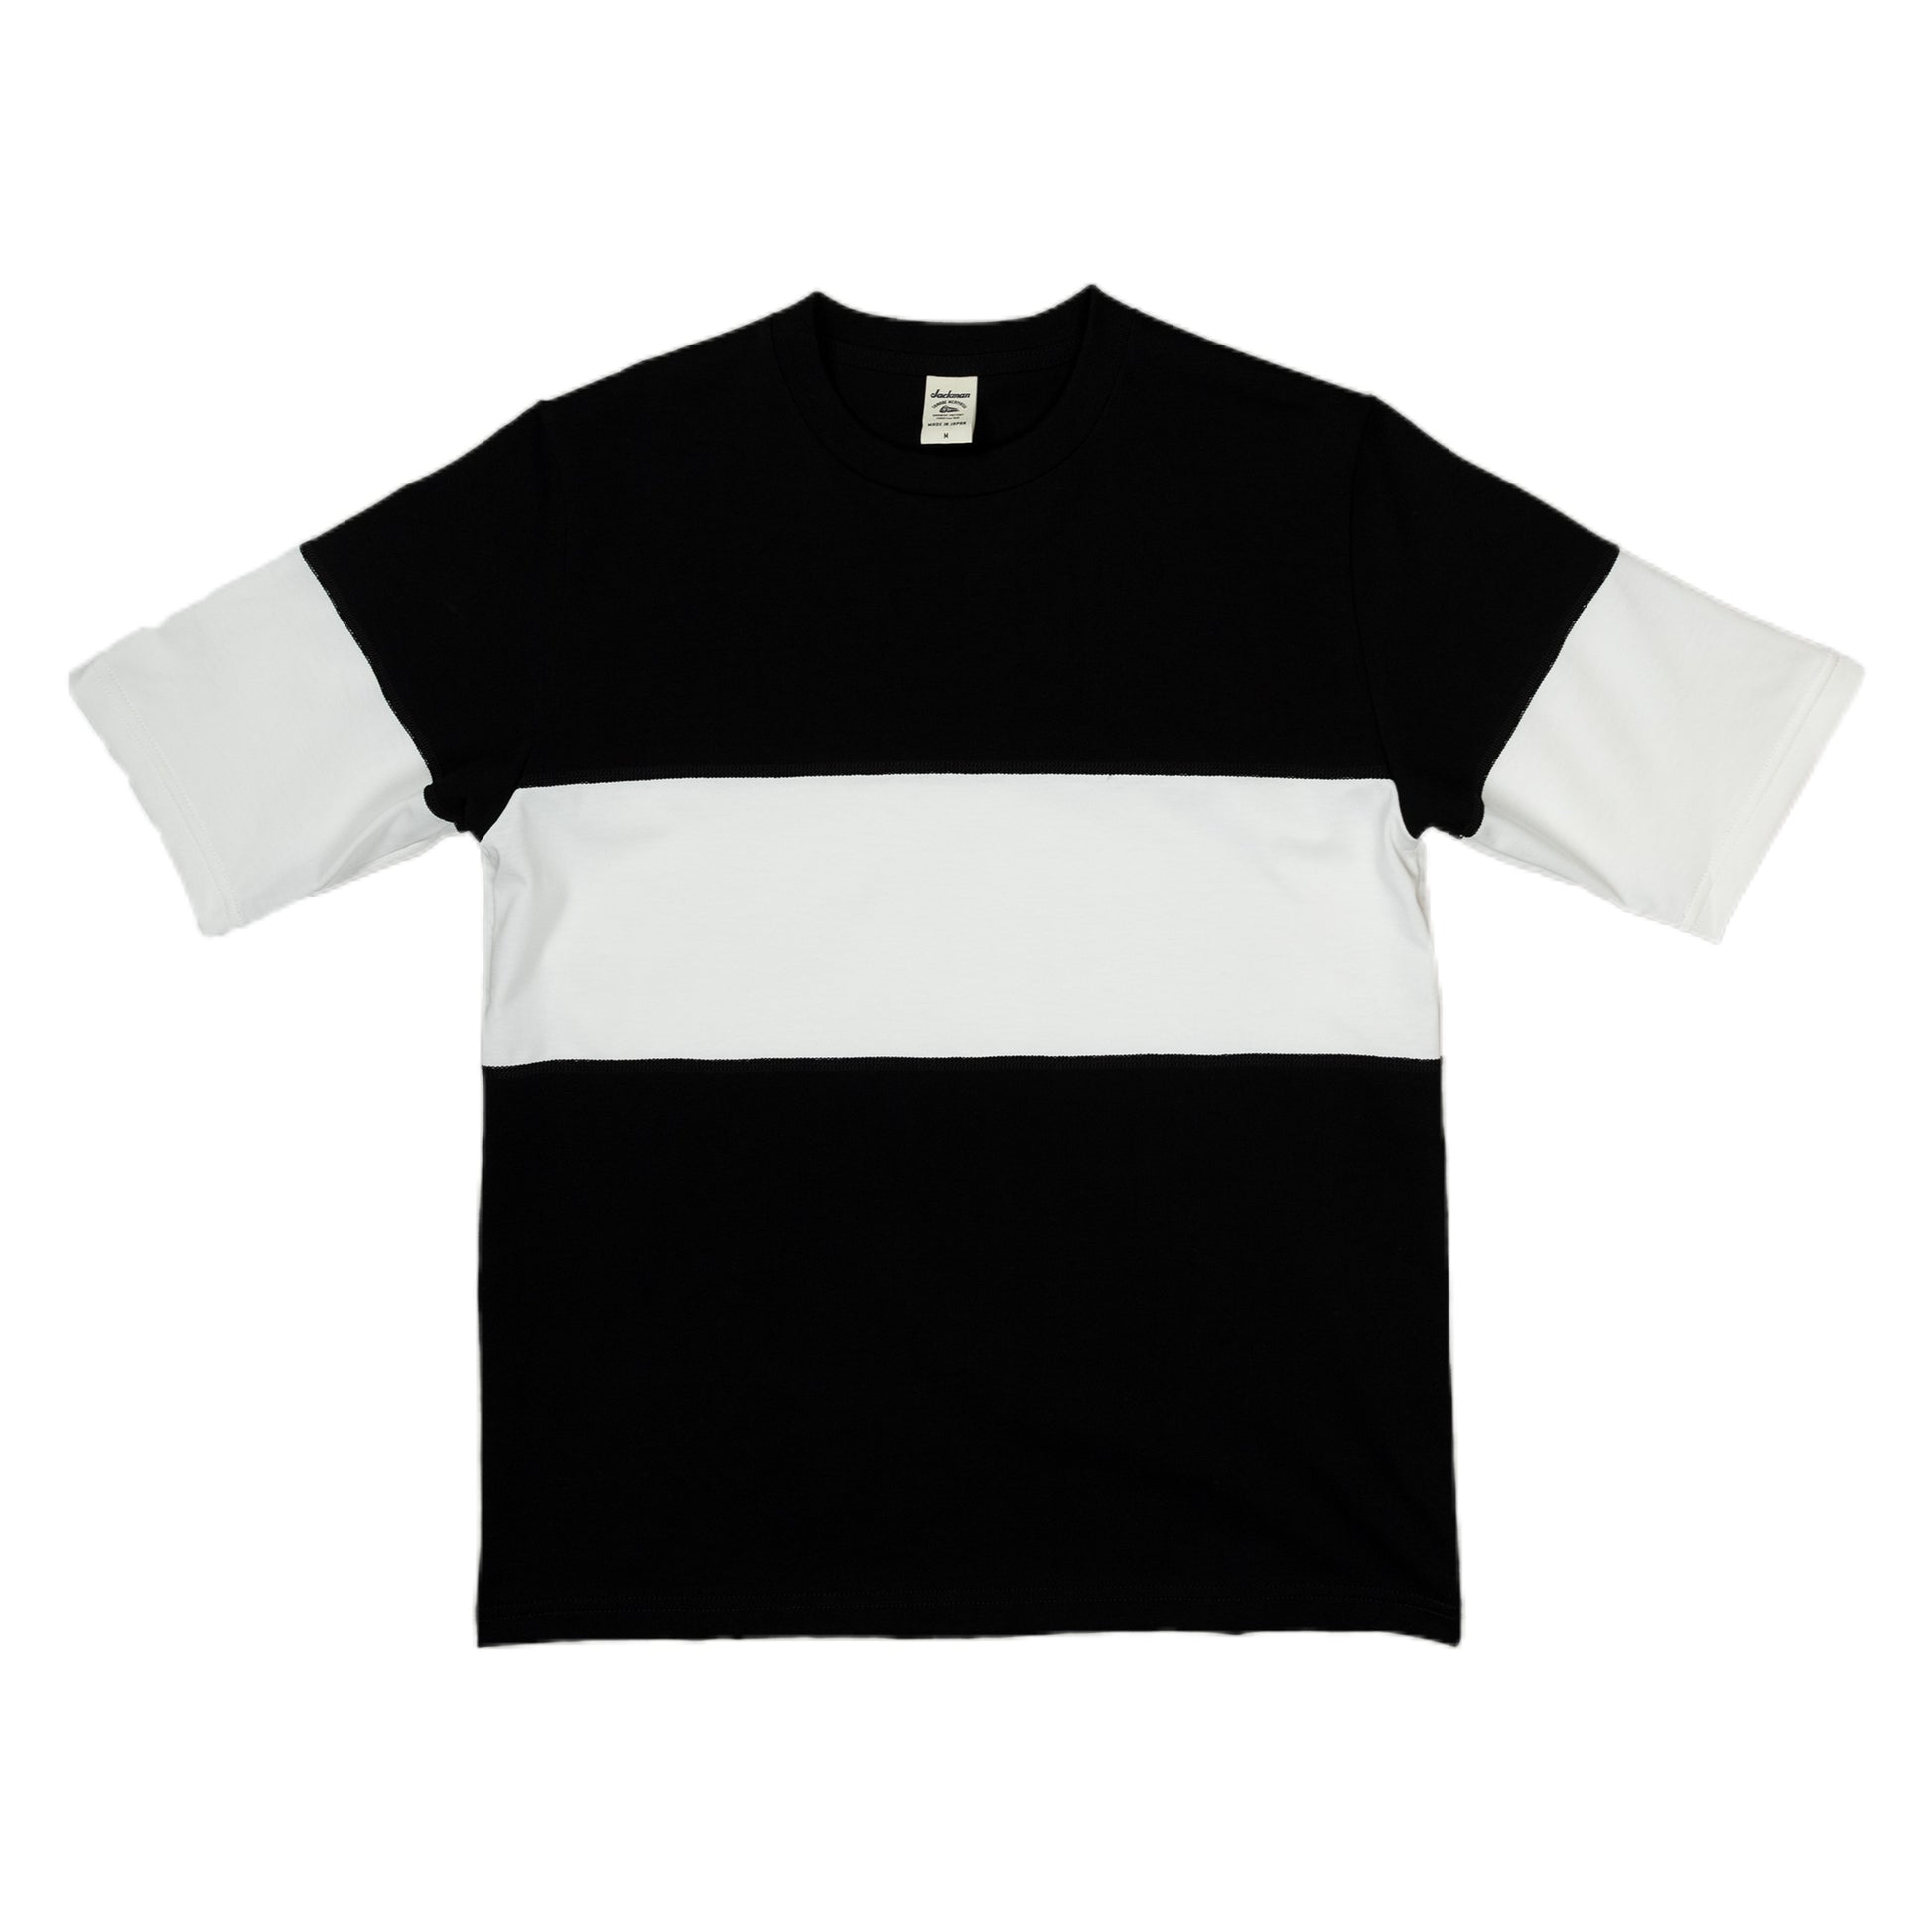 Jackman Border T-Shirt Single Stripe in Black and White